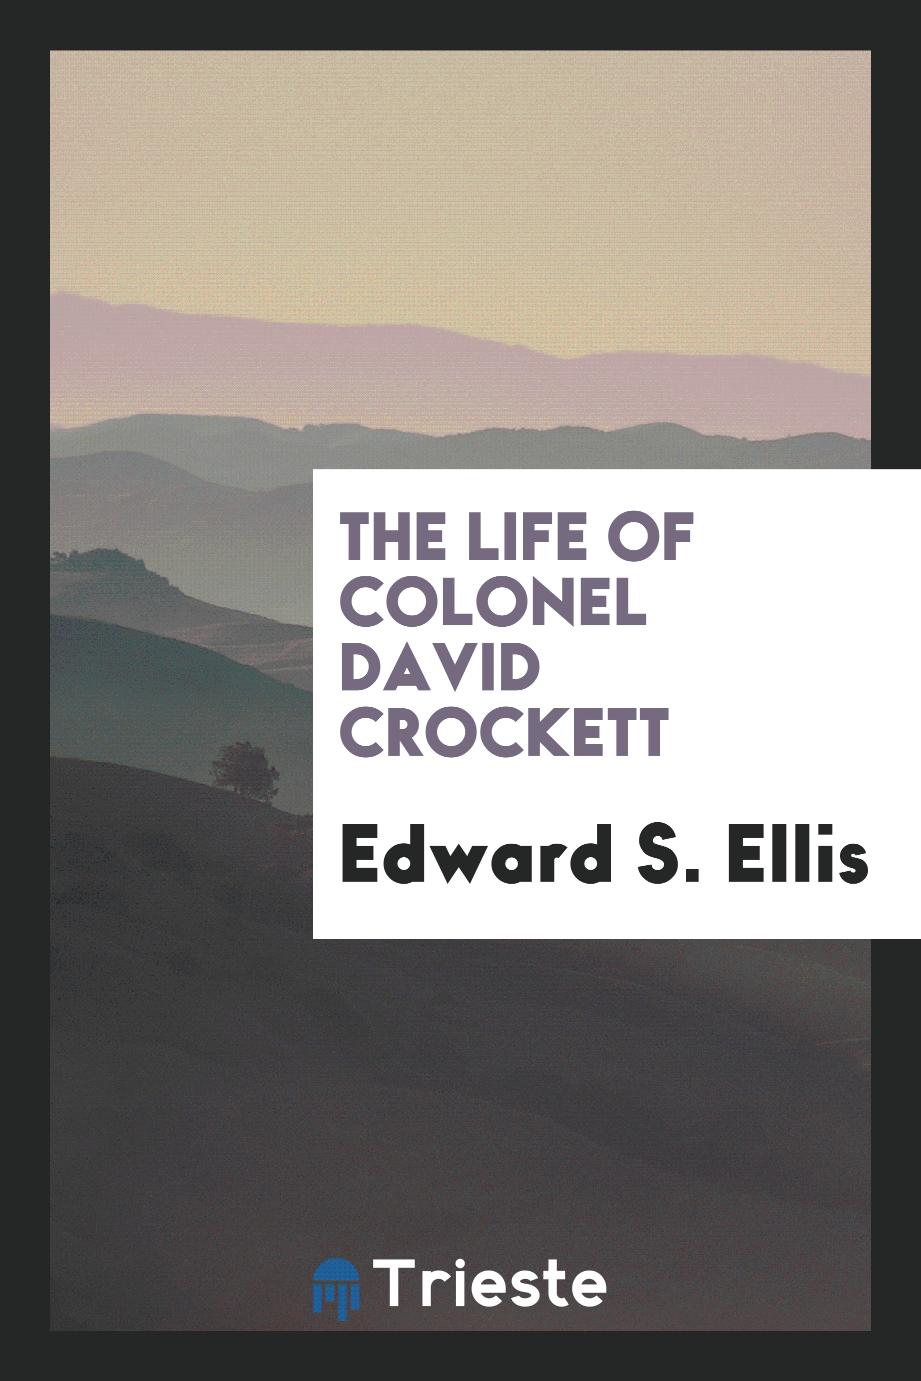 The Life of Colonel David Crockett